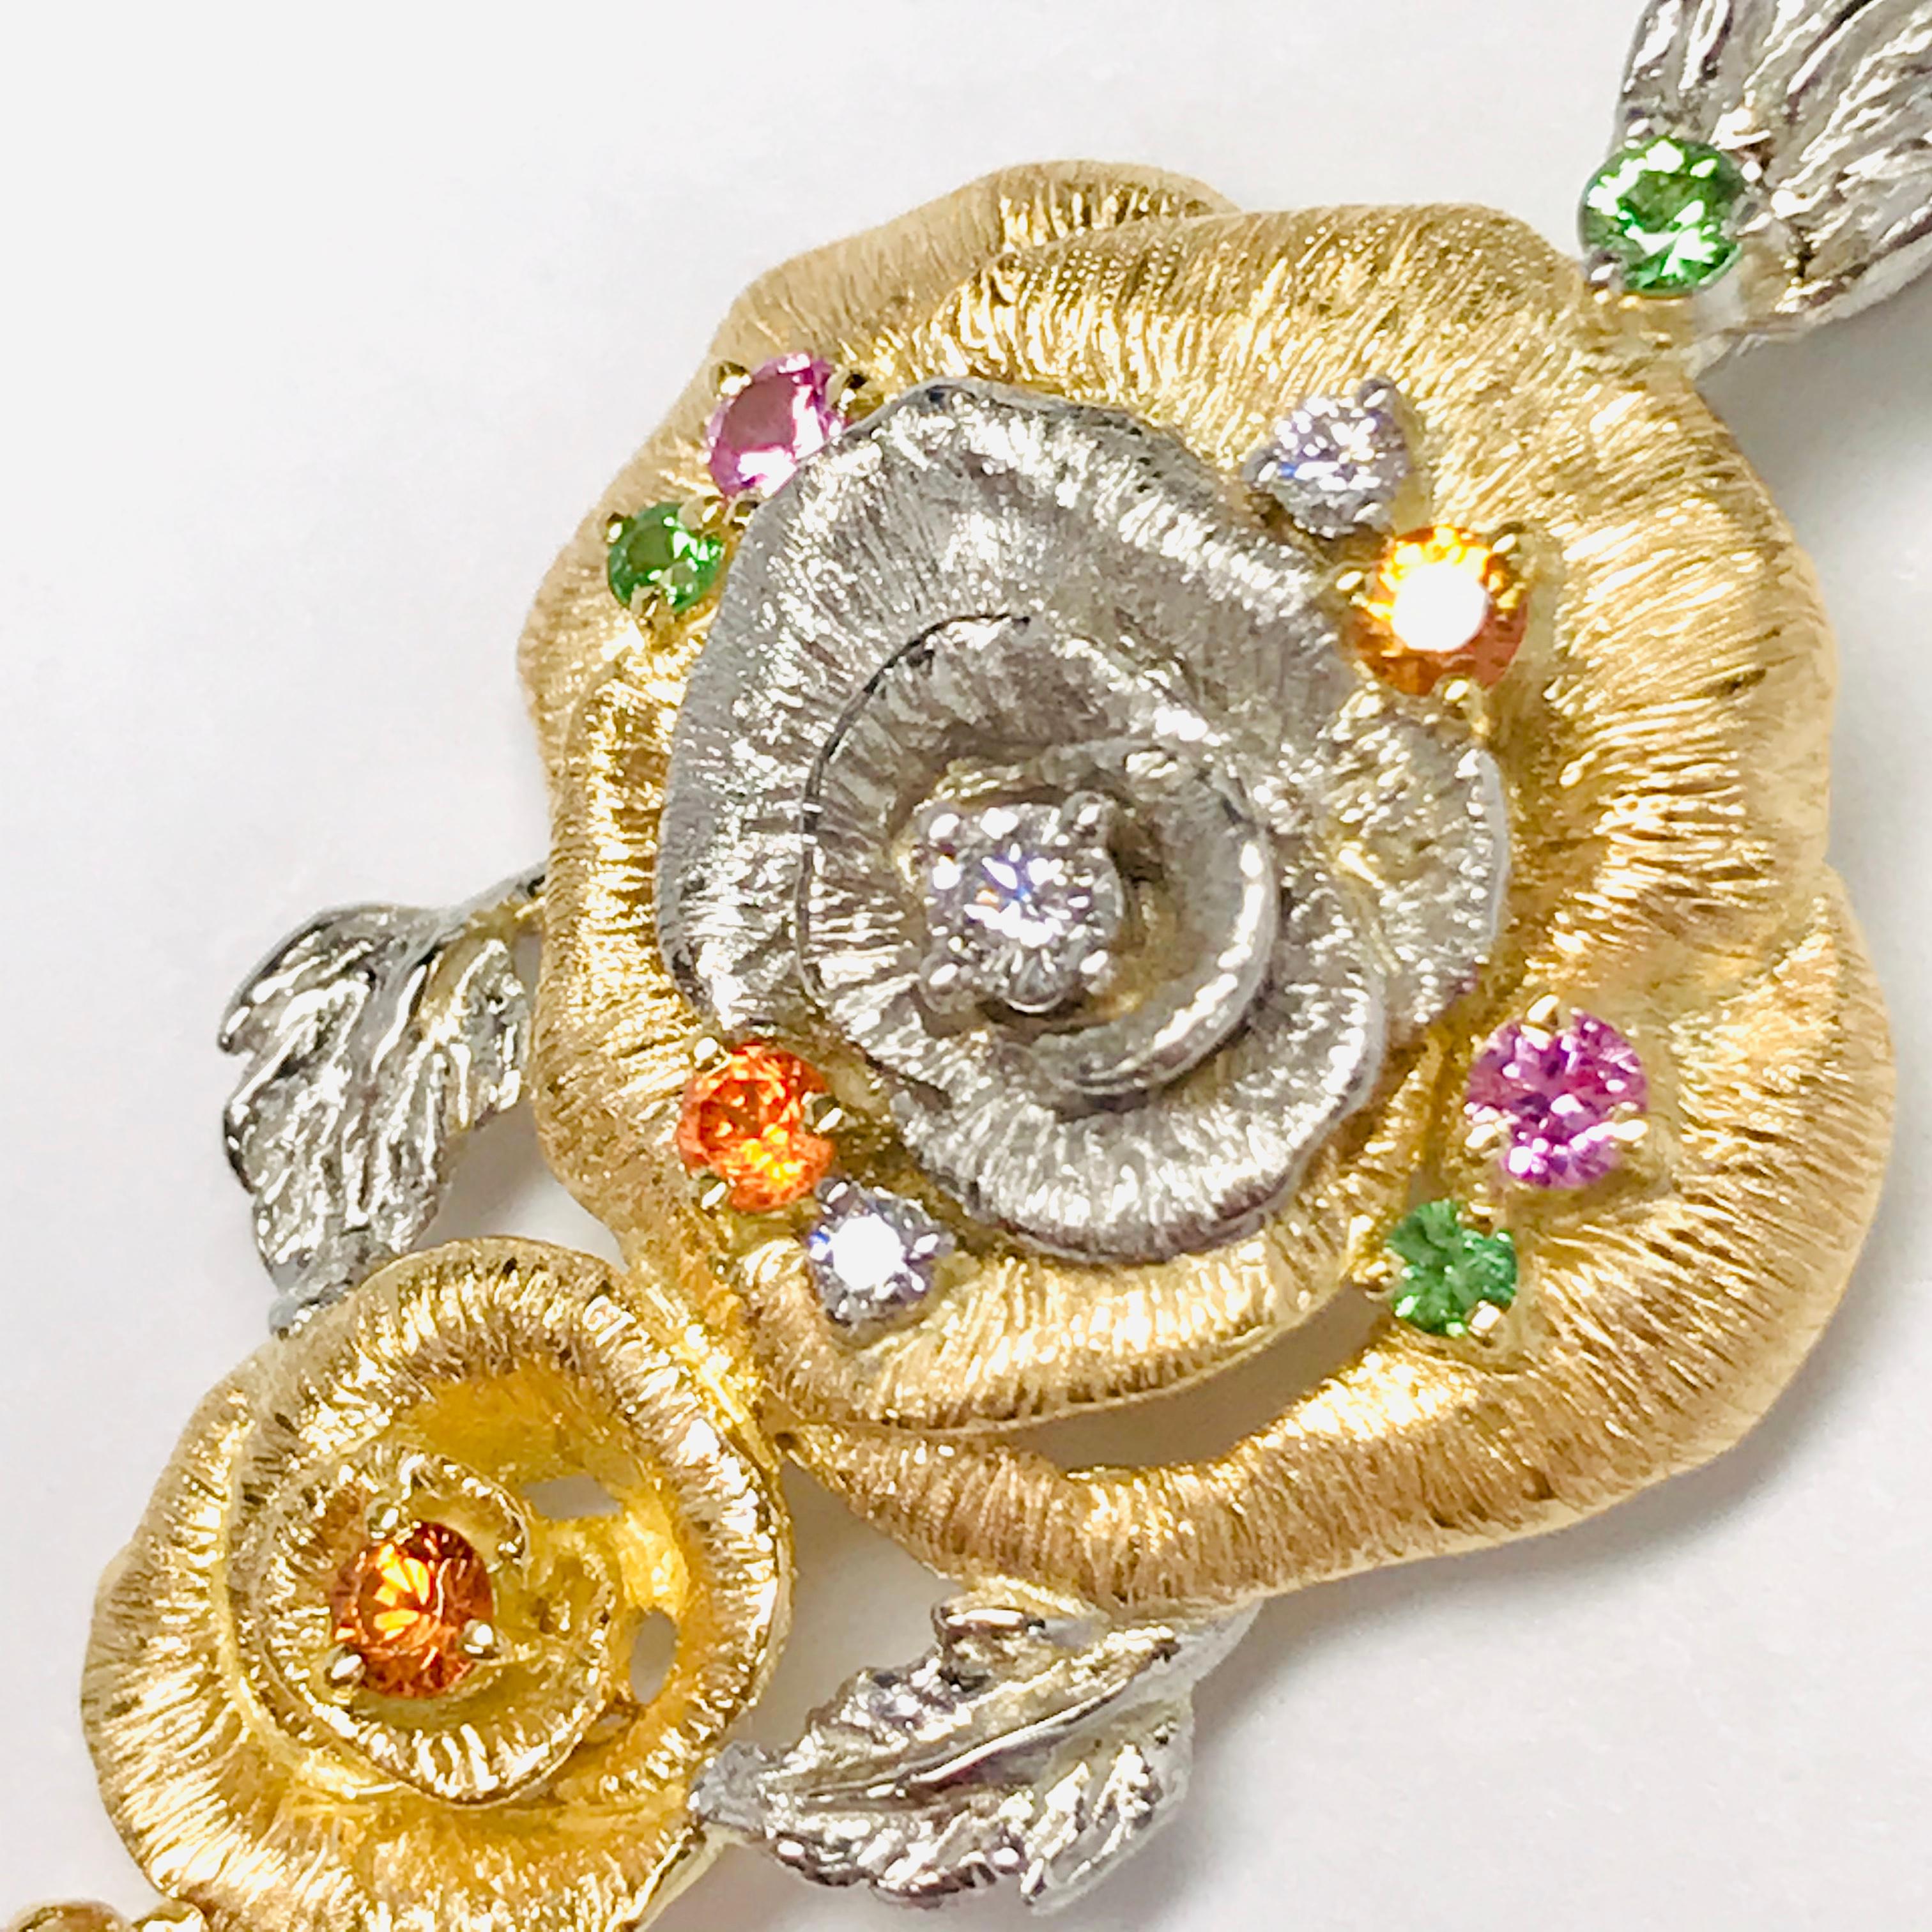 Matsuzaki K18 Gold Platinum Rose Flower 3.02 Carat Fire Opal Pendant Necklace For Sale 7